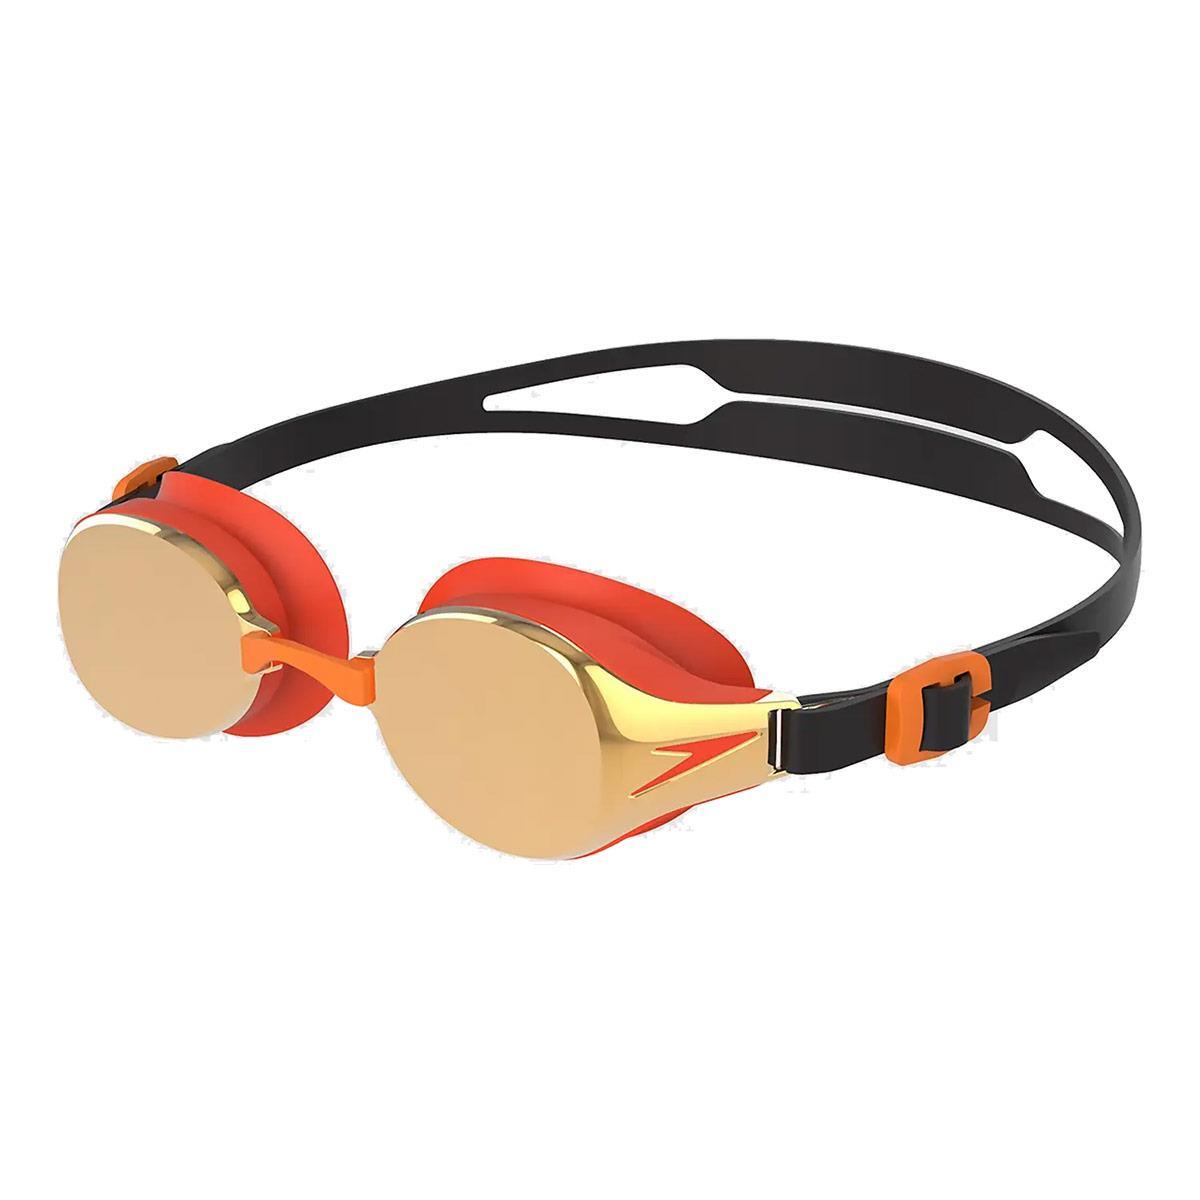 SPEEDO Speedo Hydropulse Mirrored Junior Goggles - Black/Mango/Gold